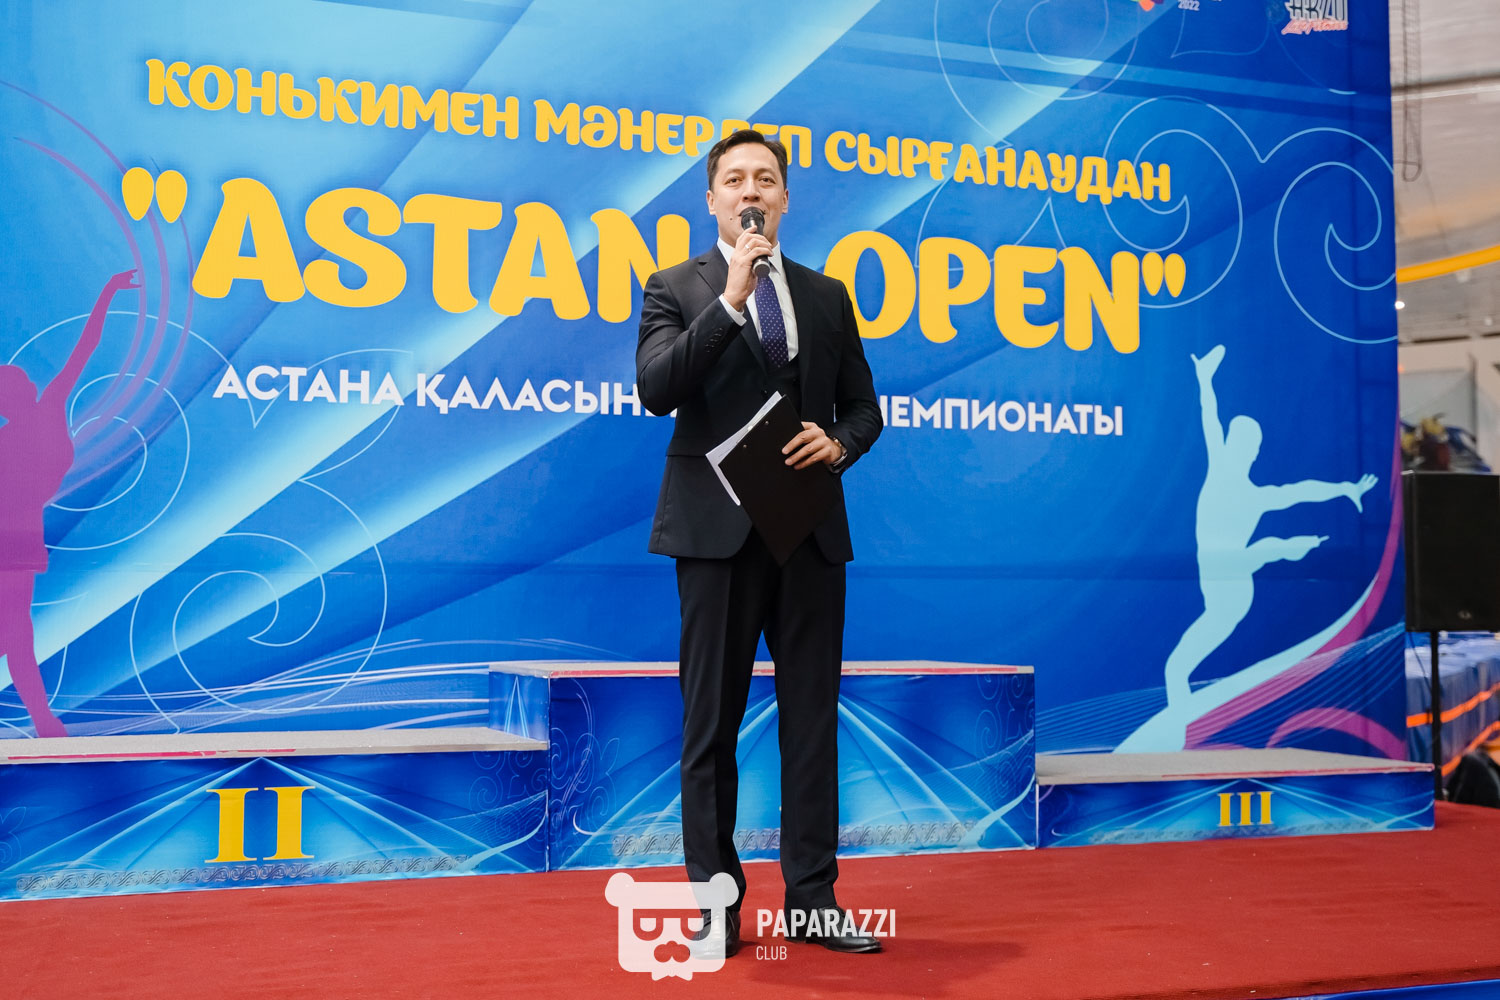 «Astana Open» открытый чемпионат г. Астана по фигурному катанию